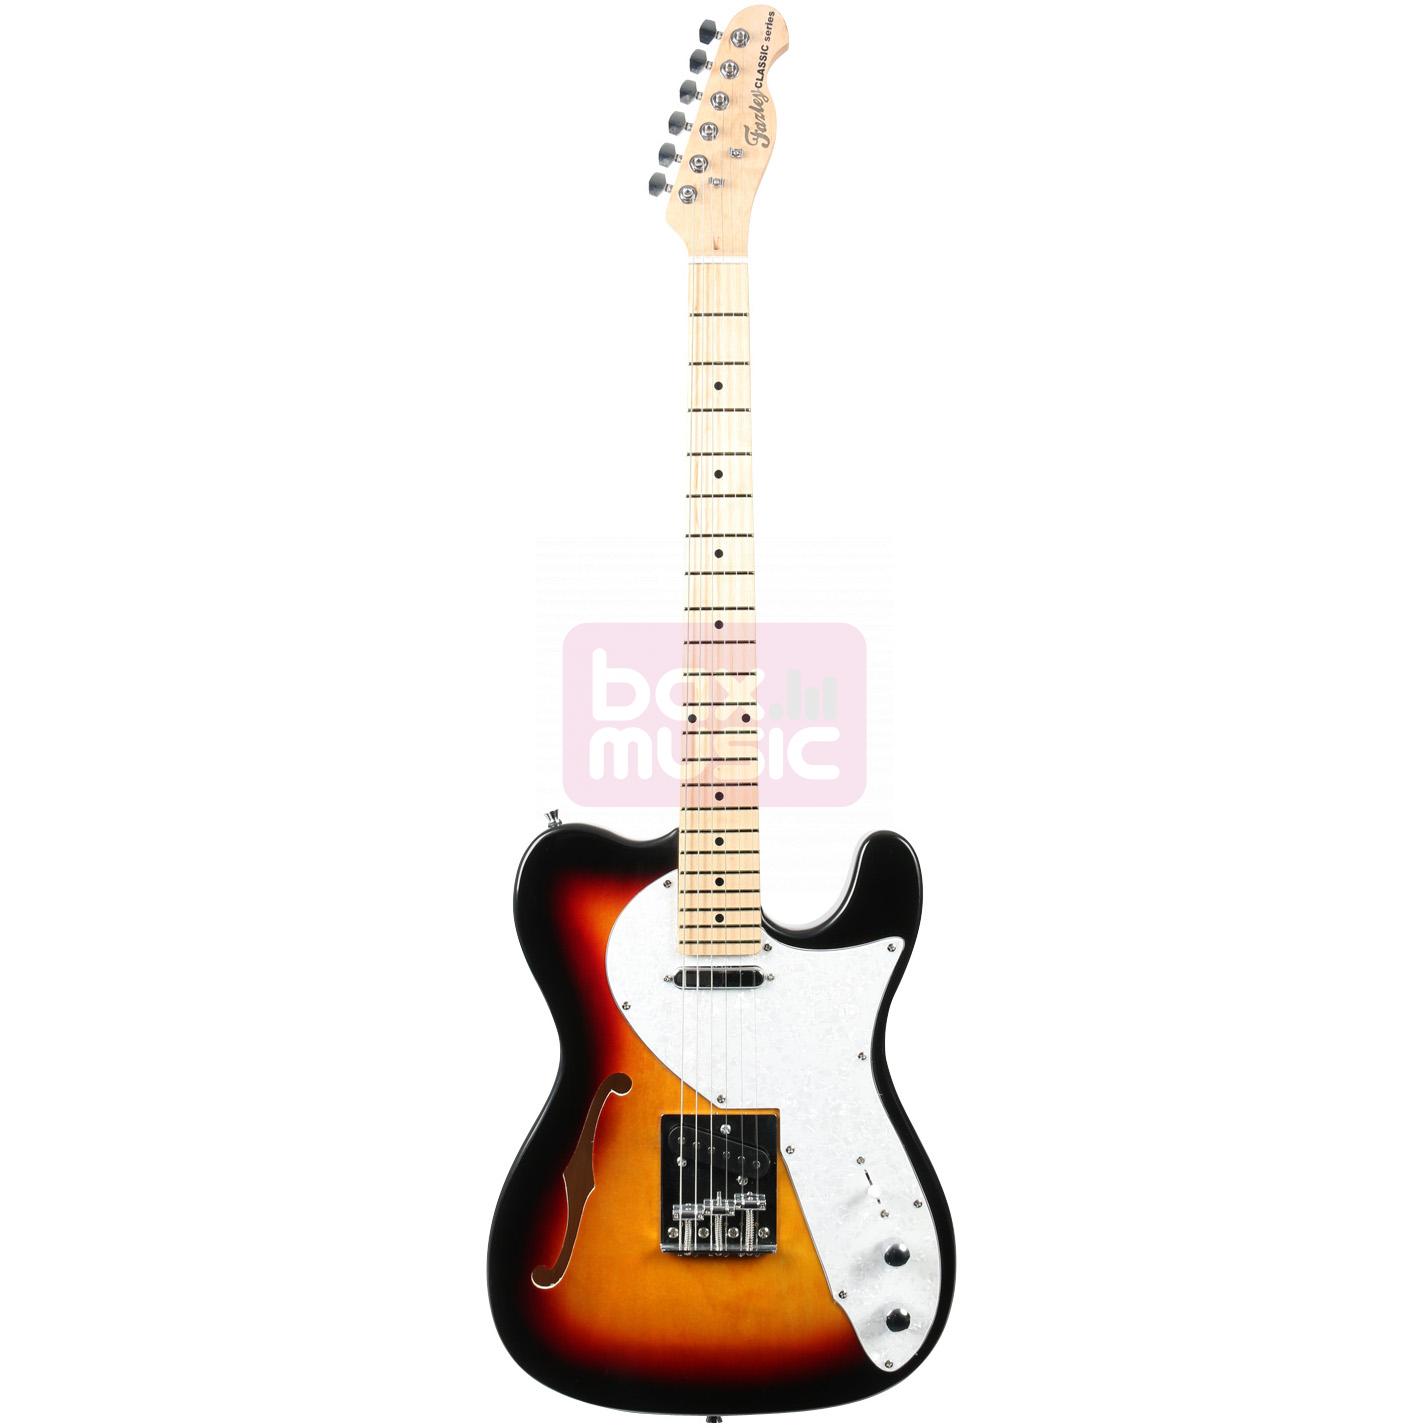 Fazley FTL210SB elektrische gitaar sunburst